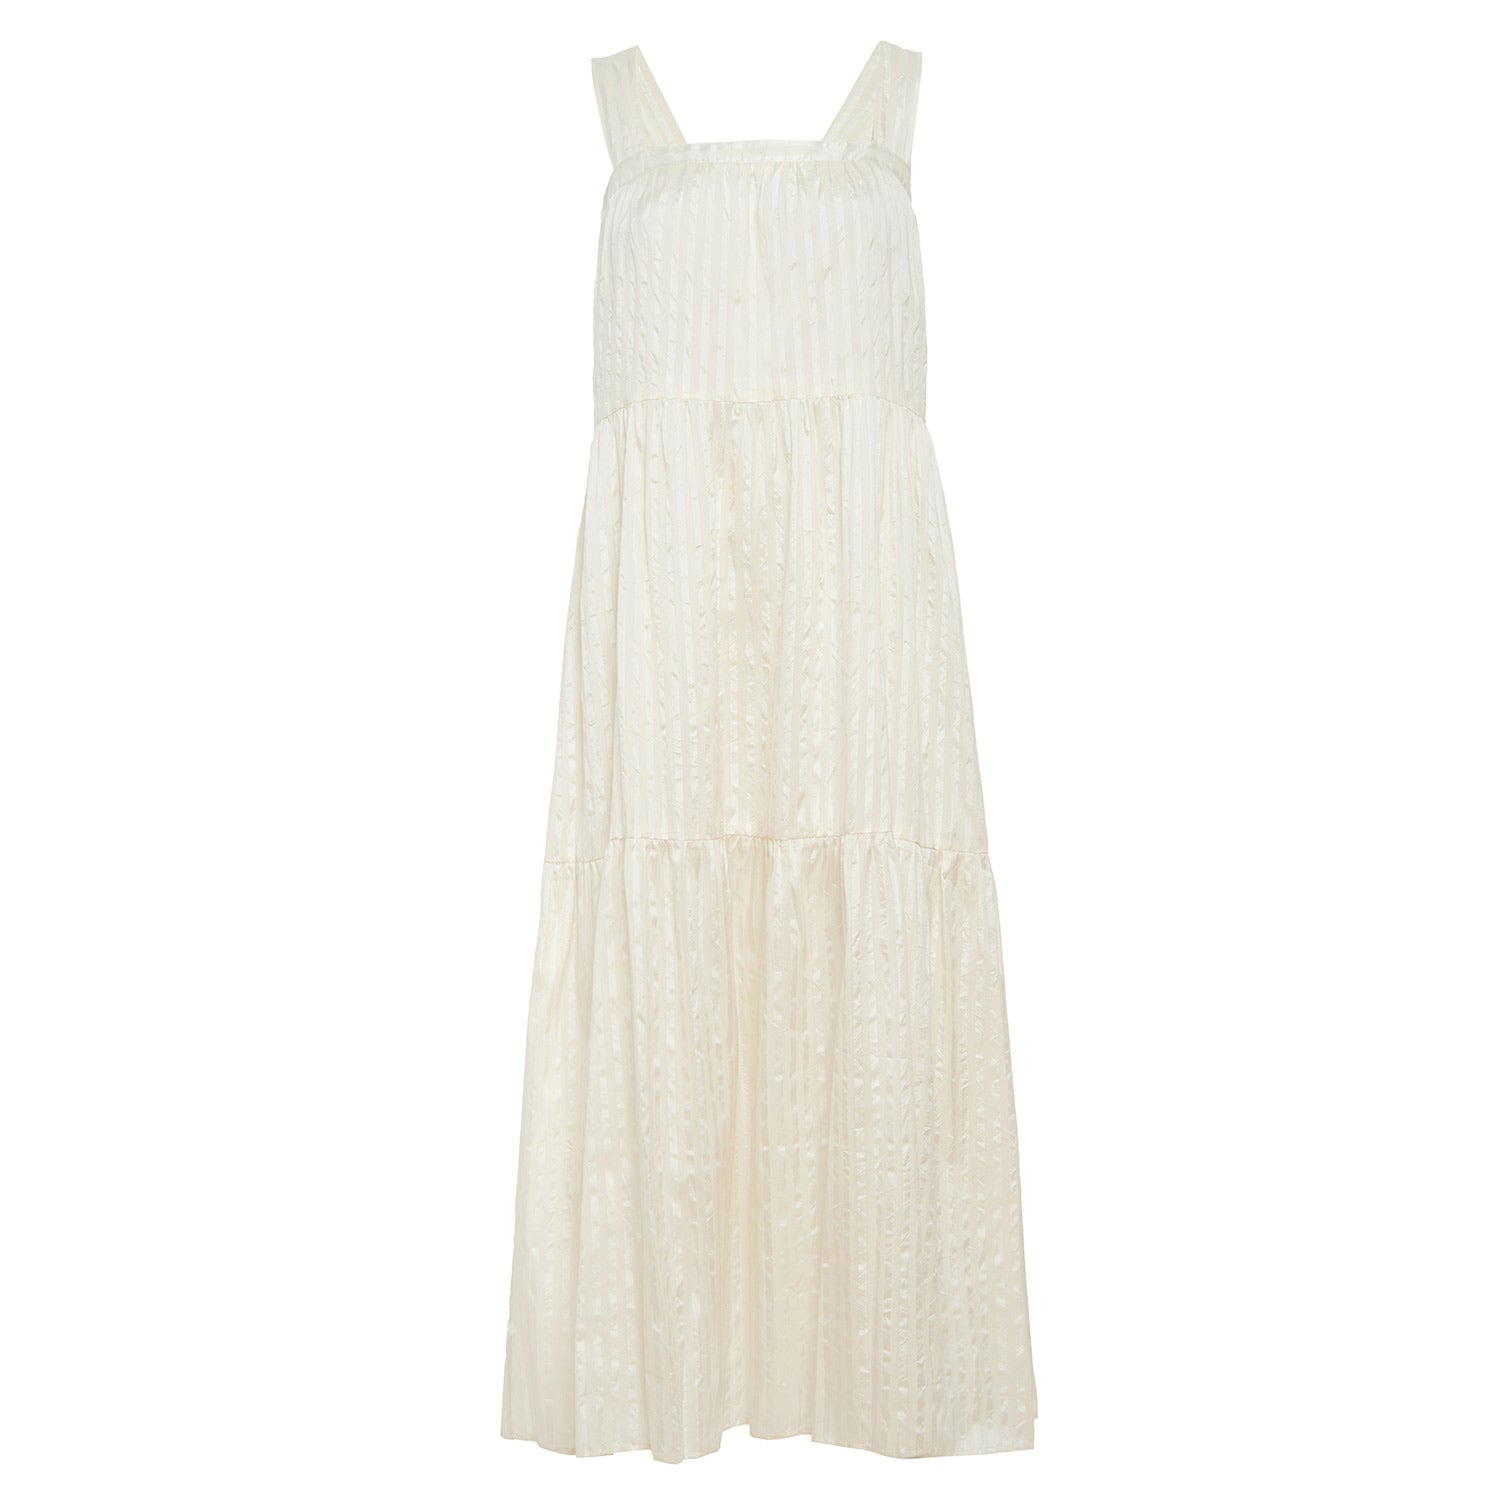 white sleeveless cotton silk blend boho beach style dress